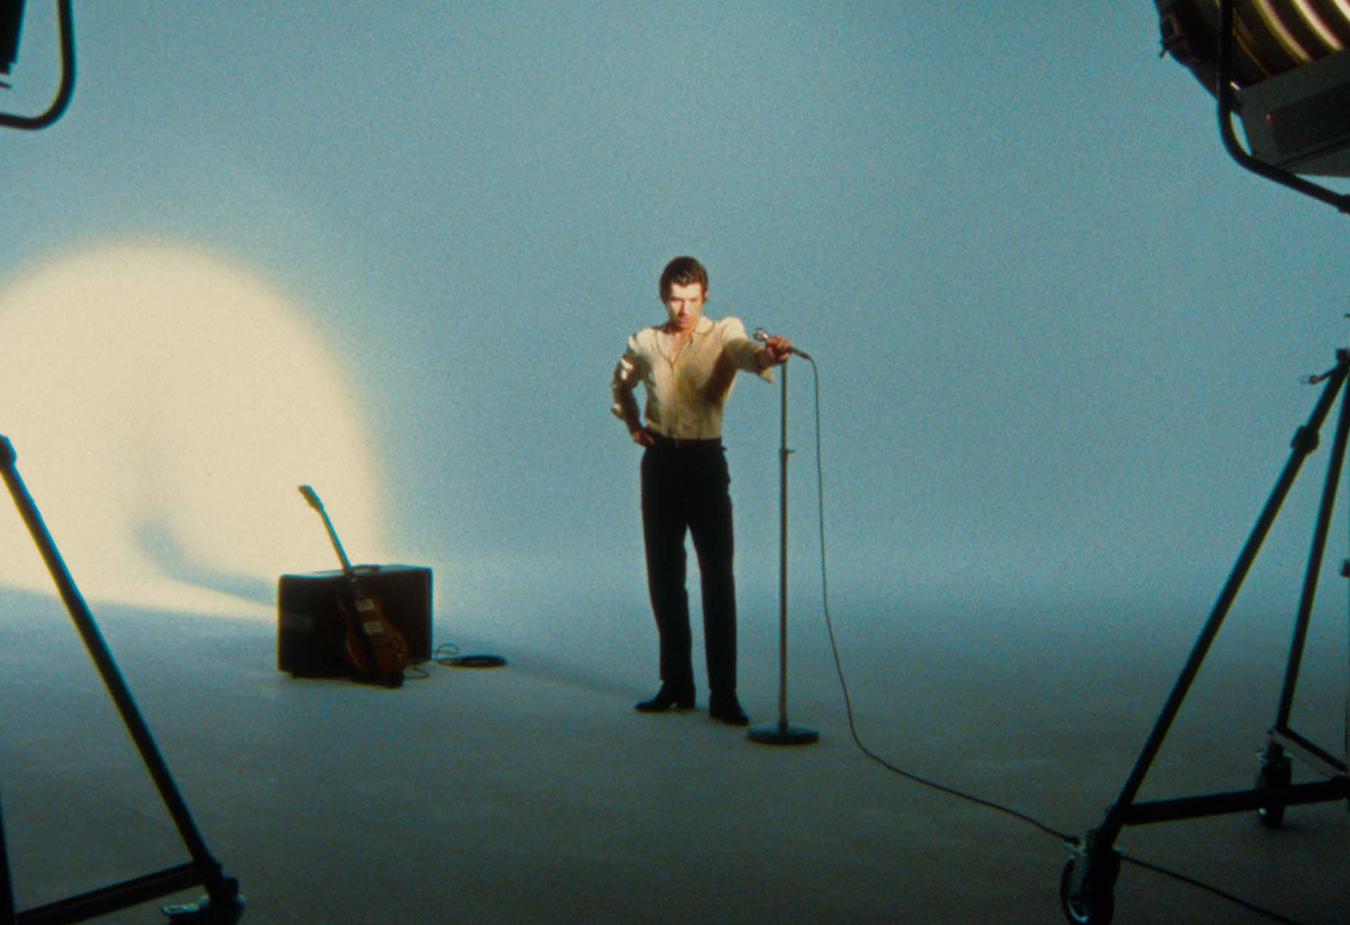 Arctic Monkeys Shared Body Paint Single for "The Car" Album